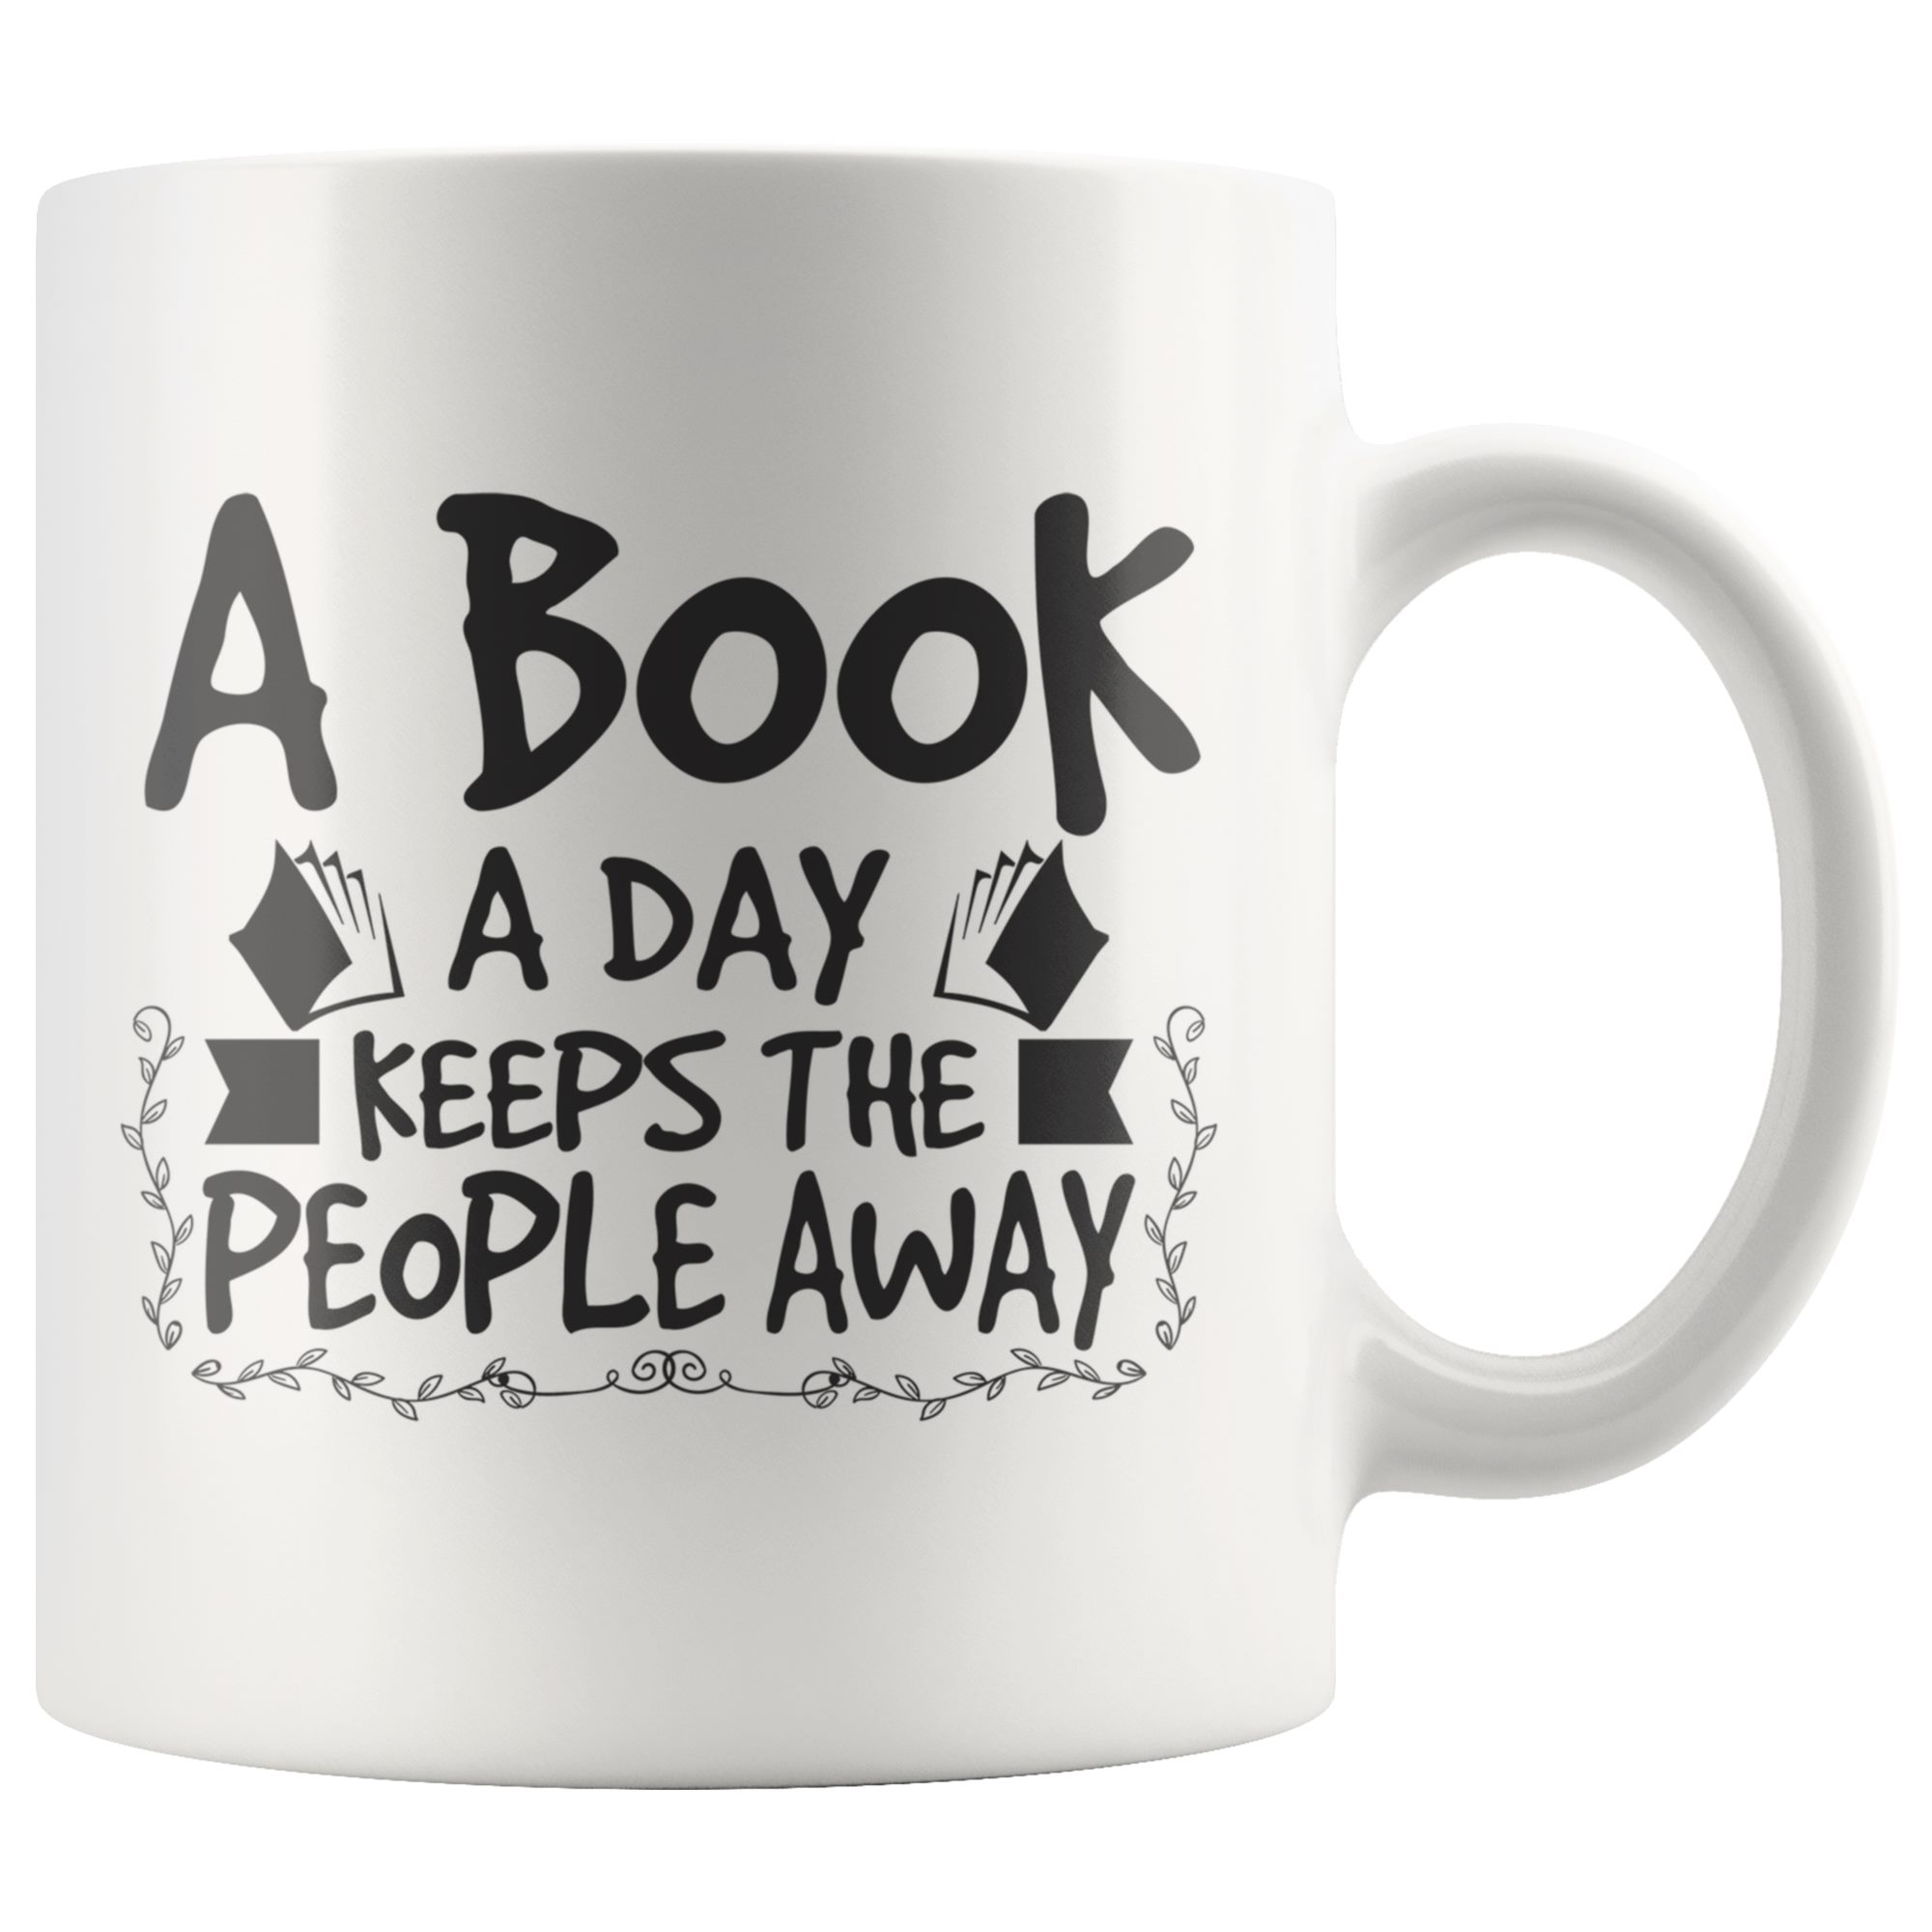 A book day keeps the people away halloween mug